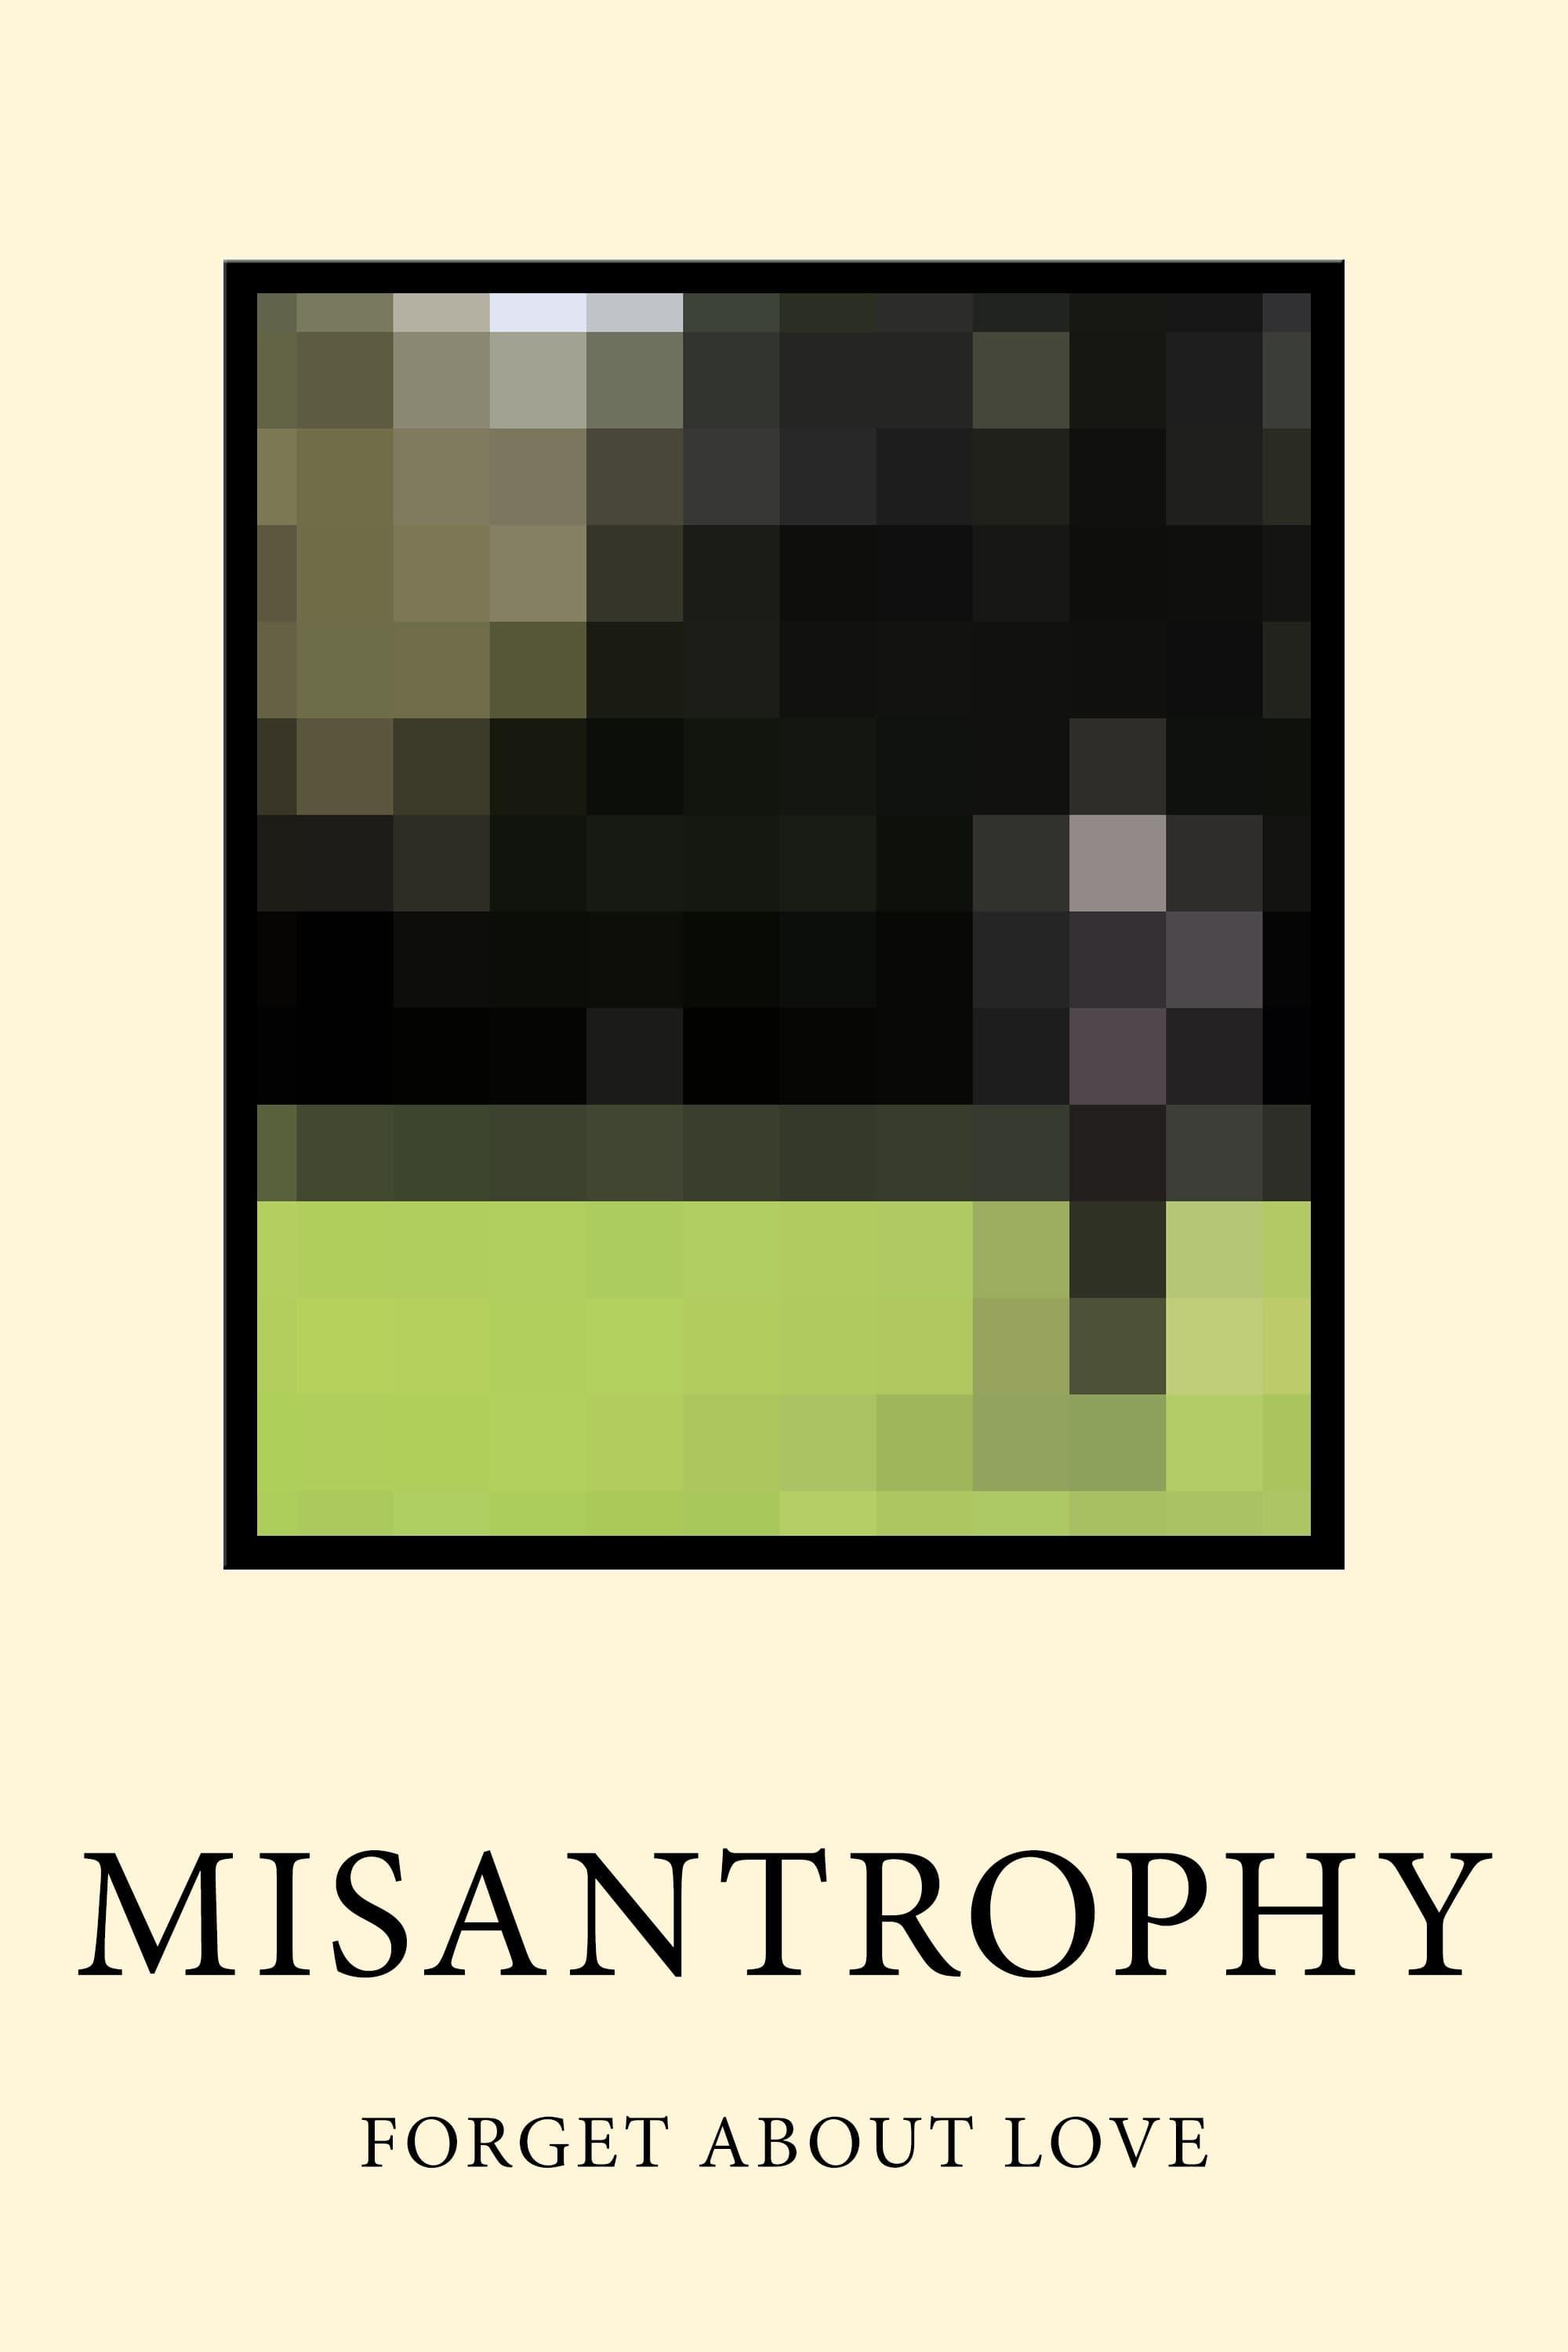 Misantrophy poster